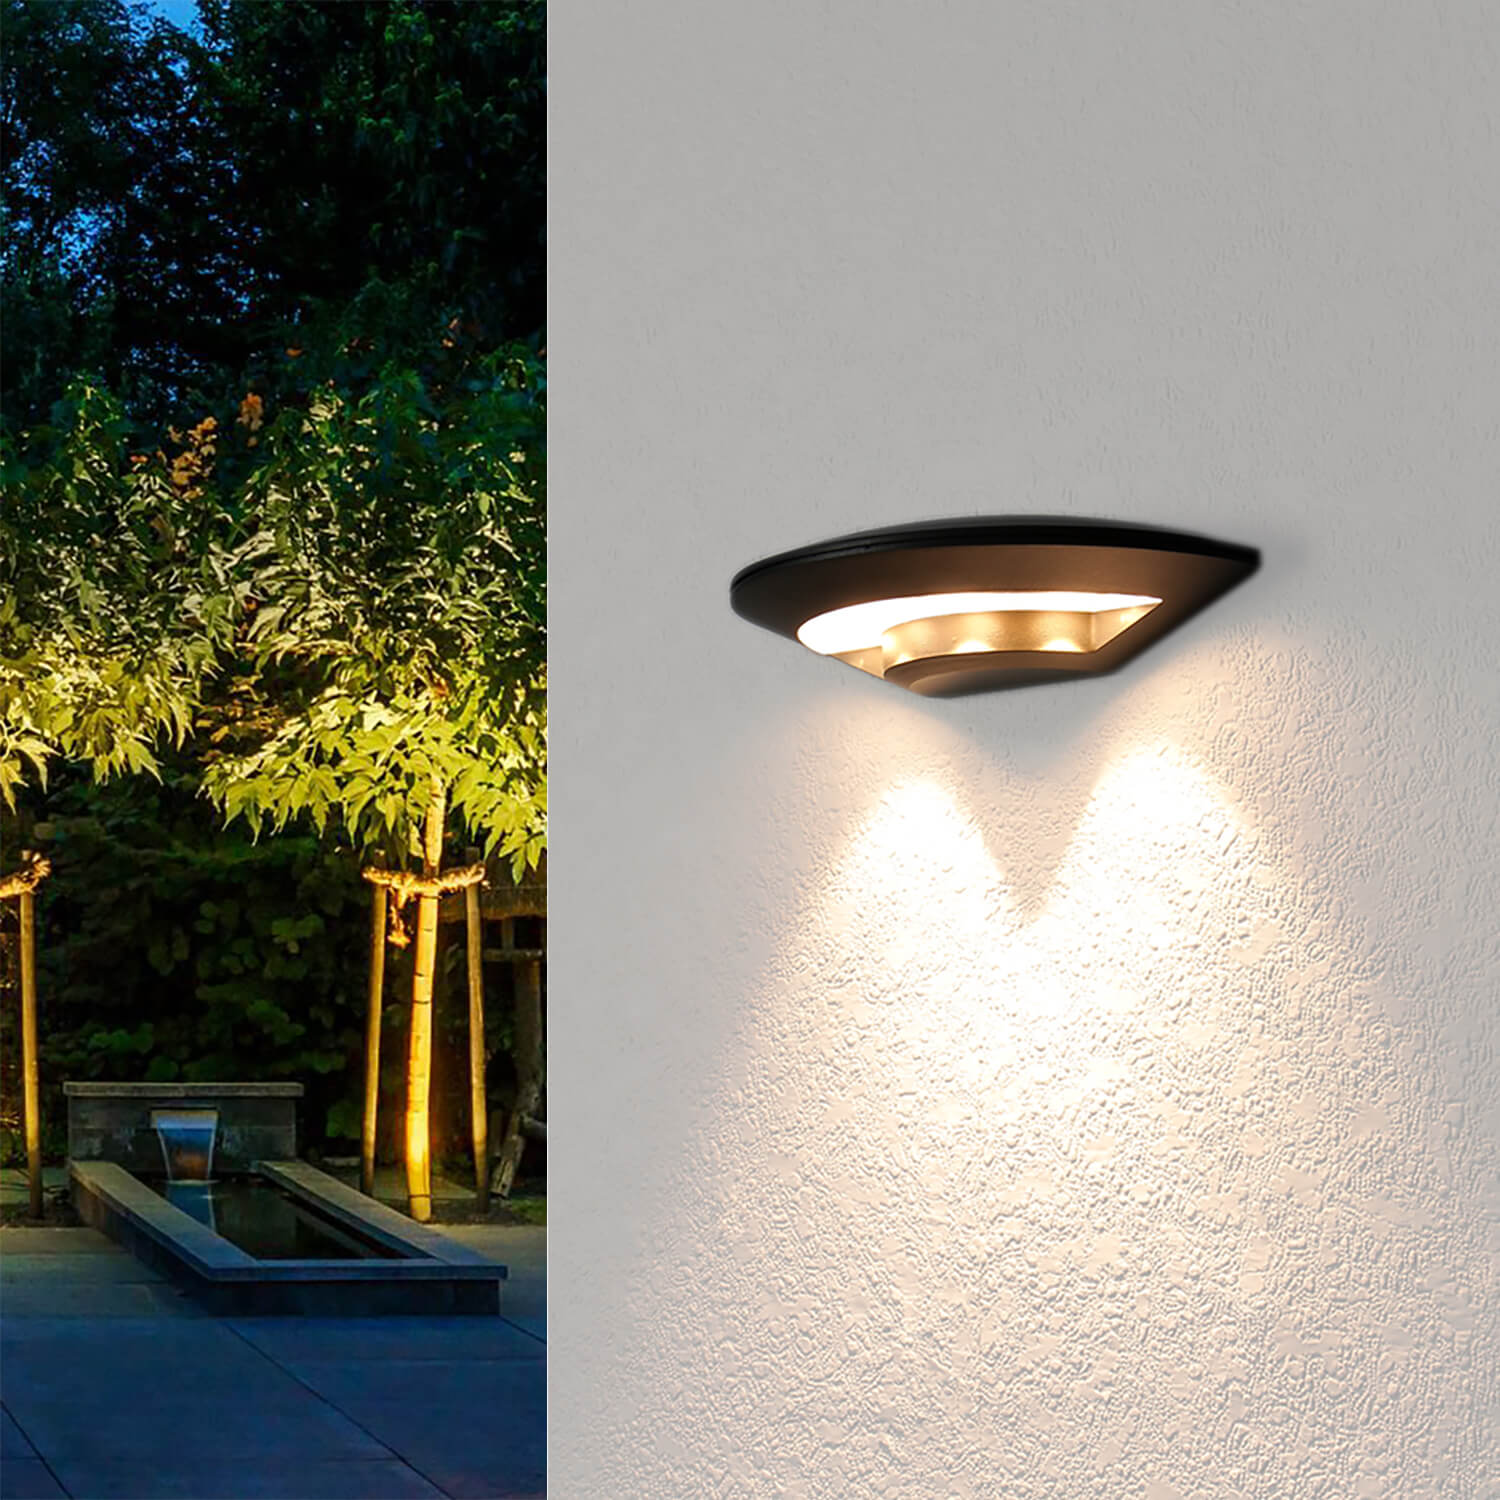 LED Außenlampe Anthrazit IP44 Haus Eingang Wand